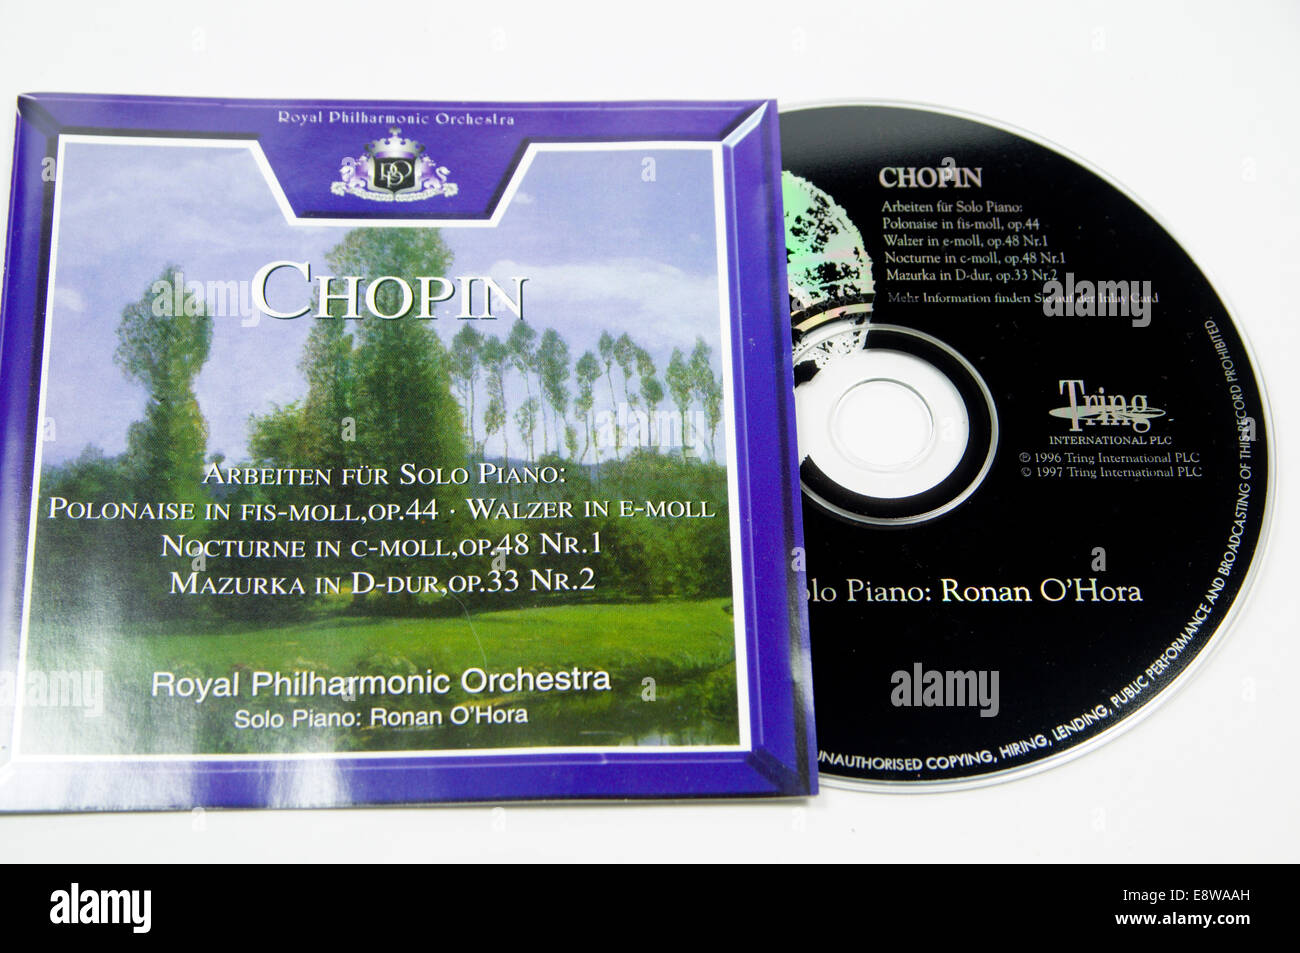 Chopin compact disc. Stock Photo